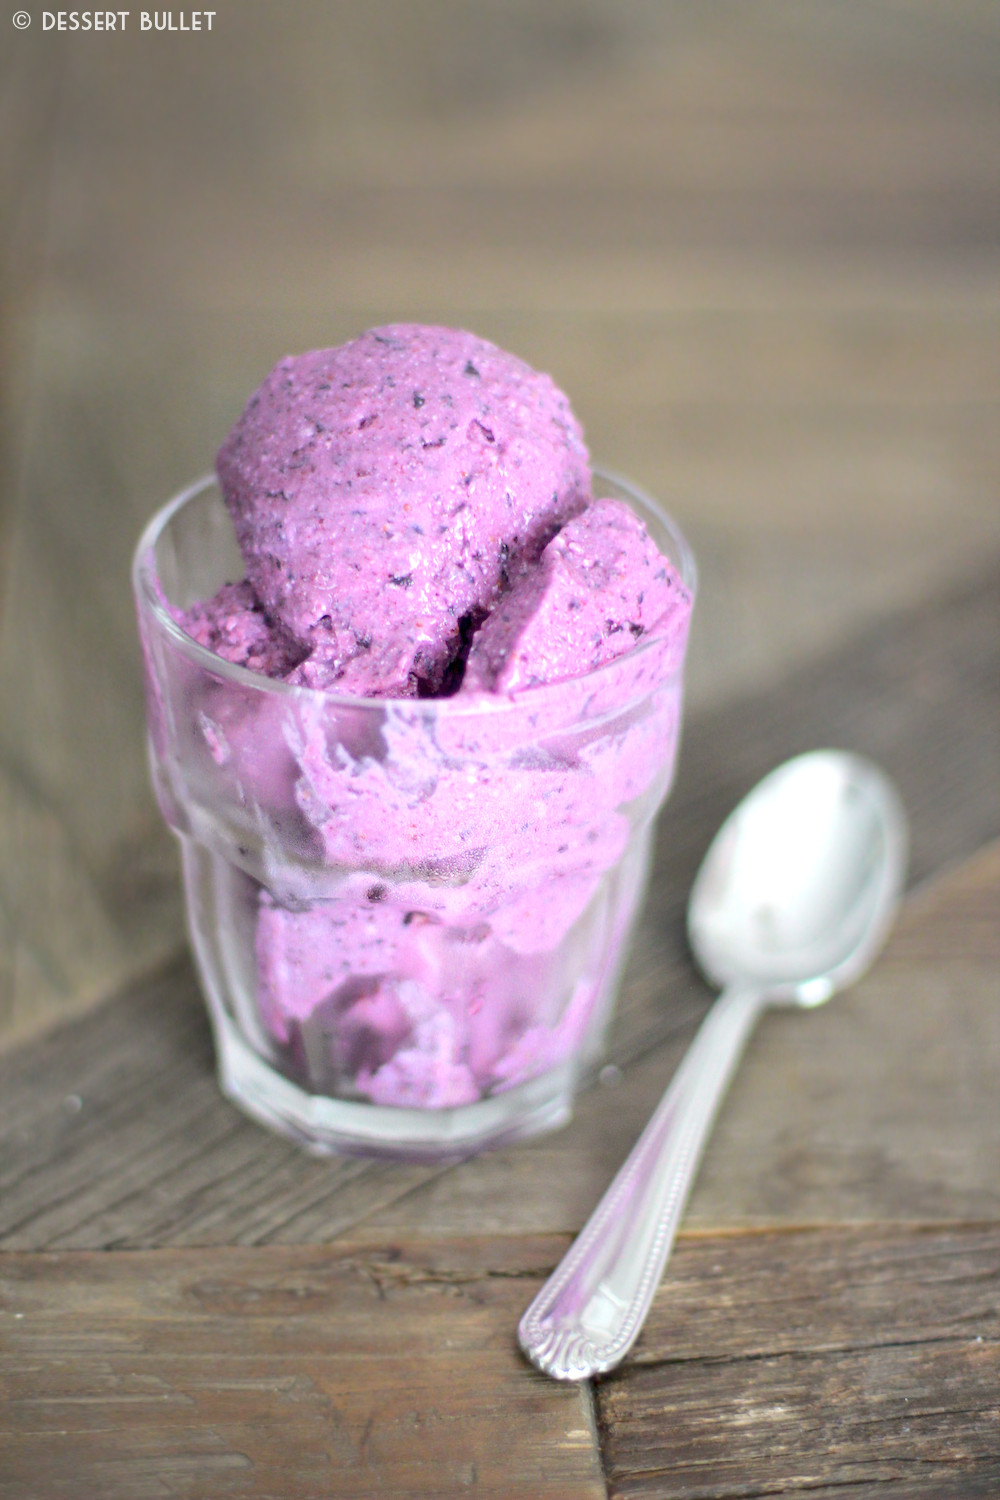 Low Calorie Ice Cream Recipes For Ice Cream Maker
 Best 25 Low fat ice cream ideas on Pinterest